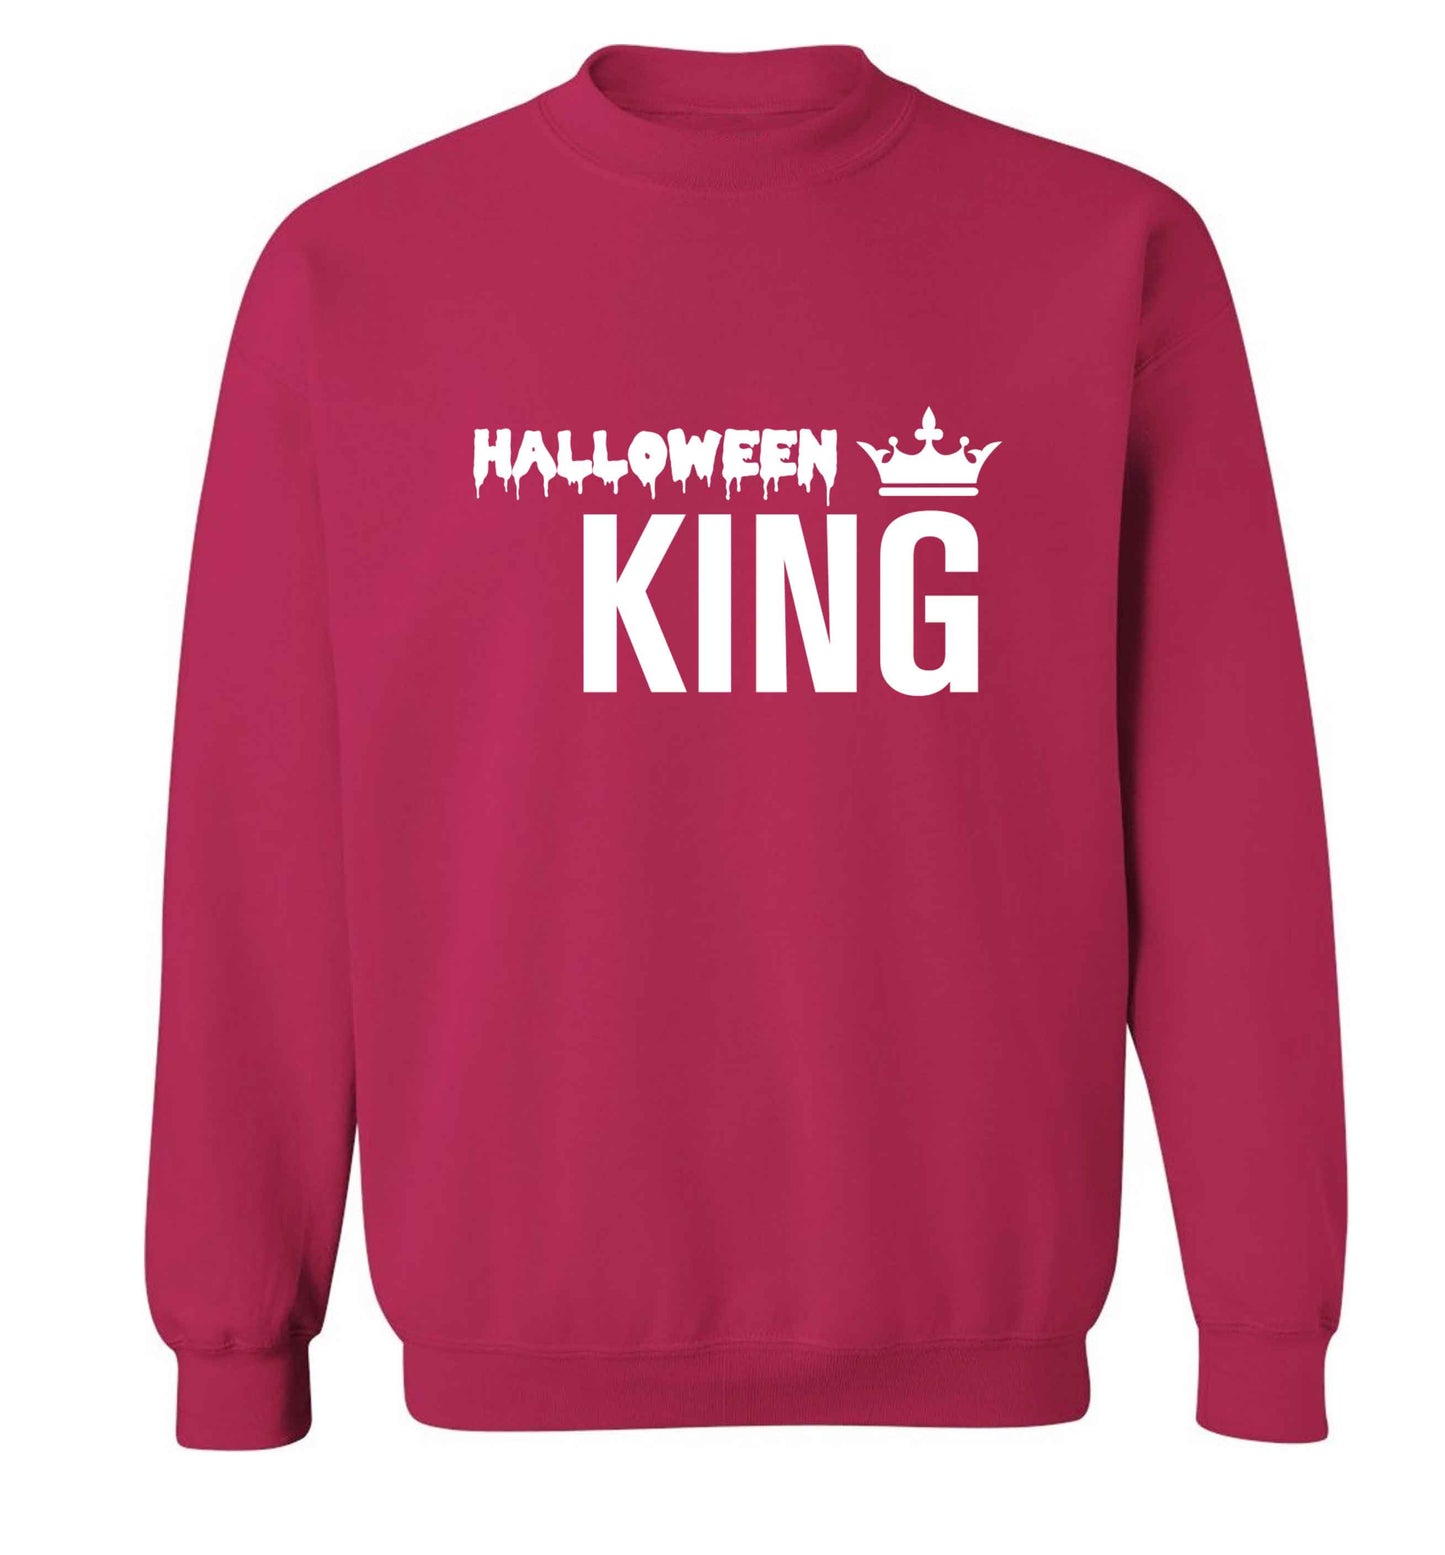 Halloween king adult's unisex pink sweater 2XL